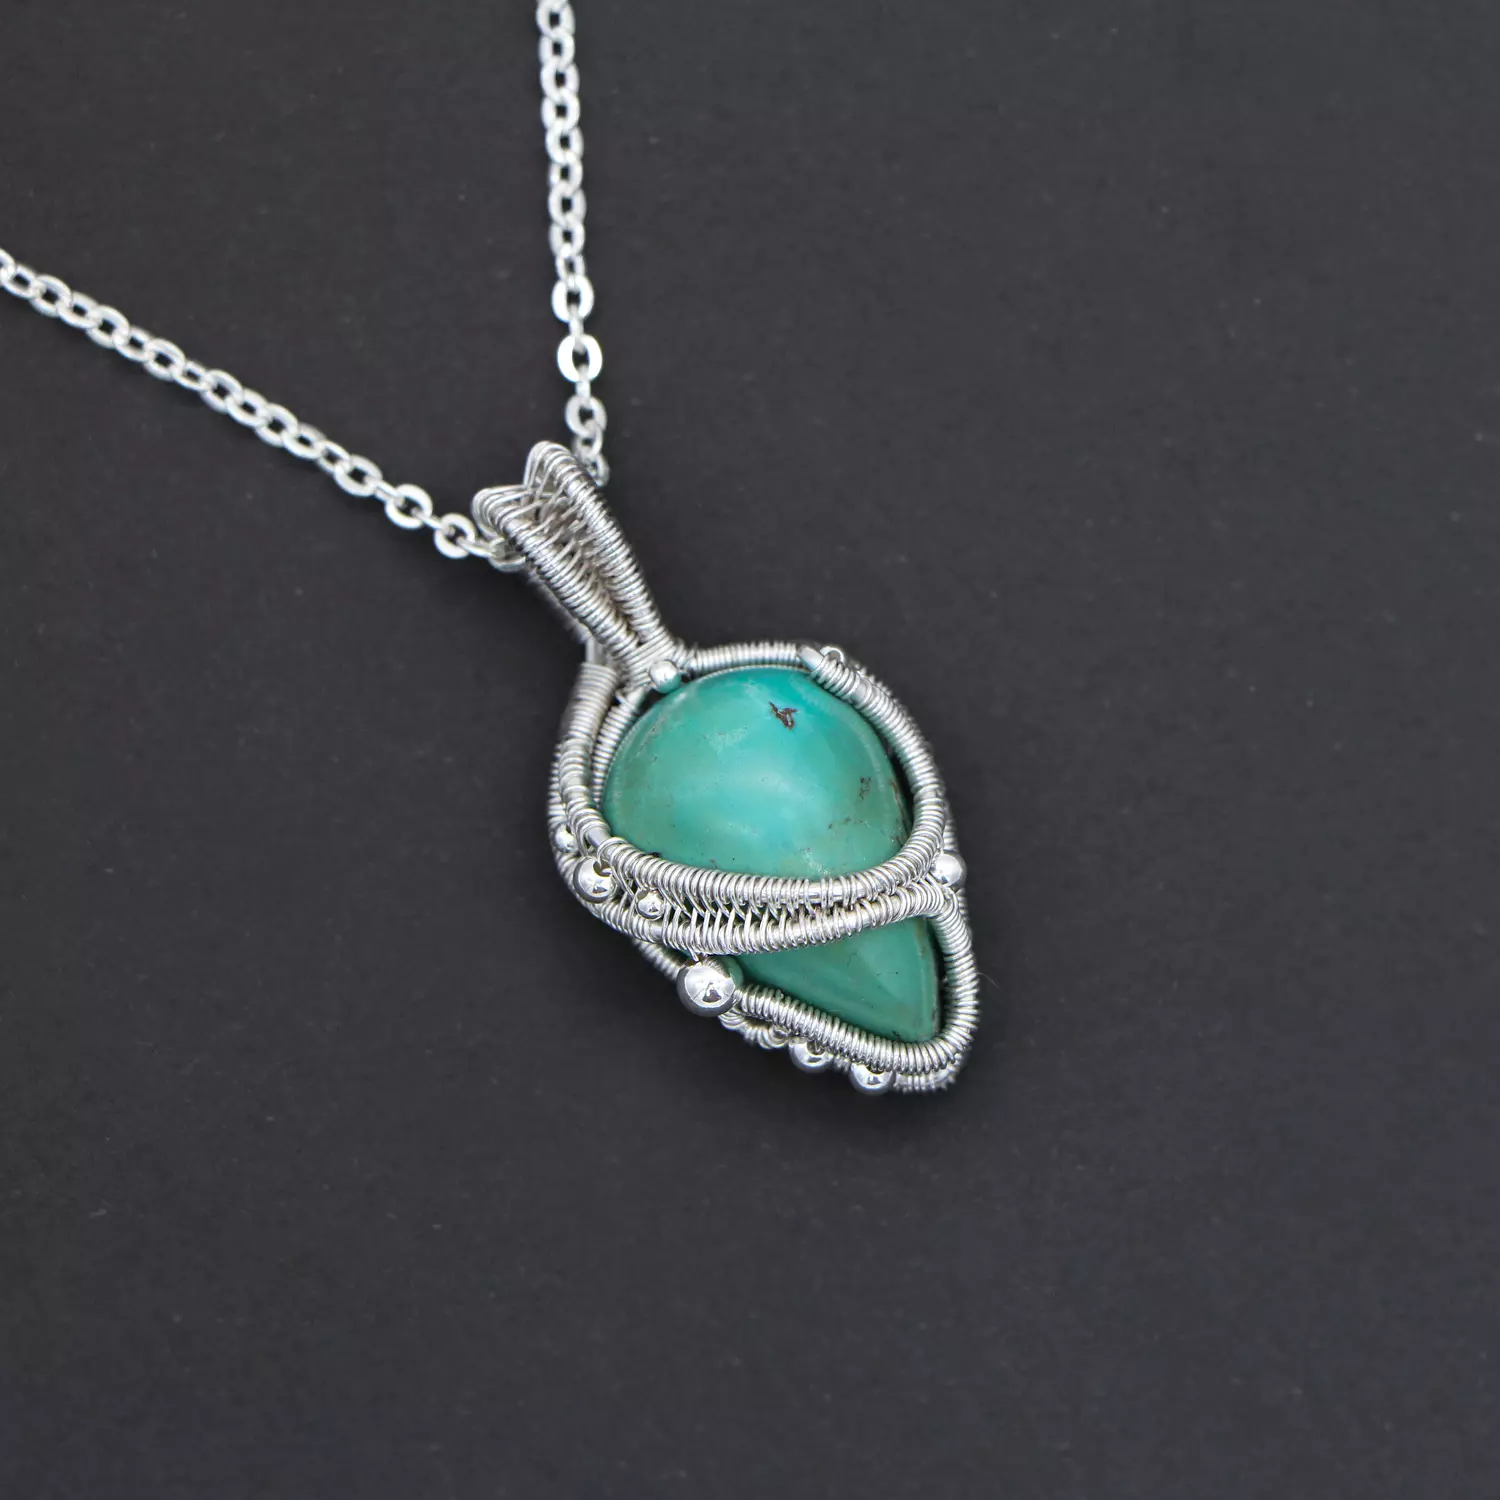 Pendant with turquoise gemstone. 1